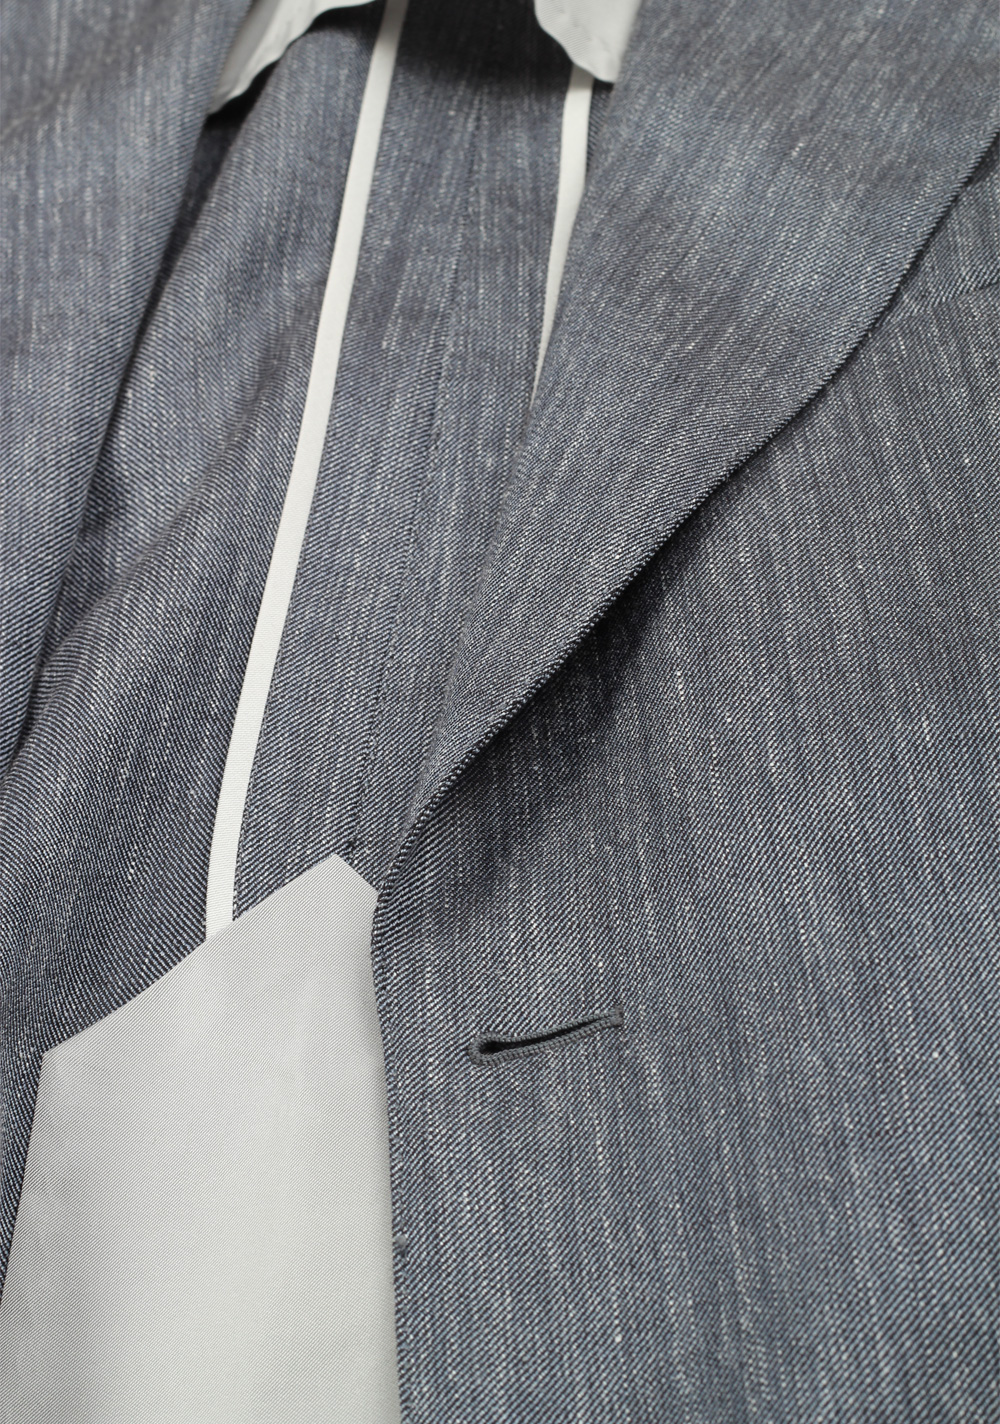 TOM FORD Spencer Gray Sport Coat Size 50 / 40R U.S. | Costume Limité